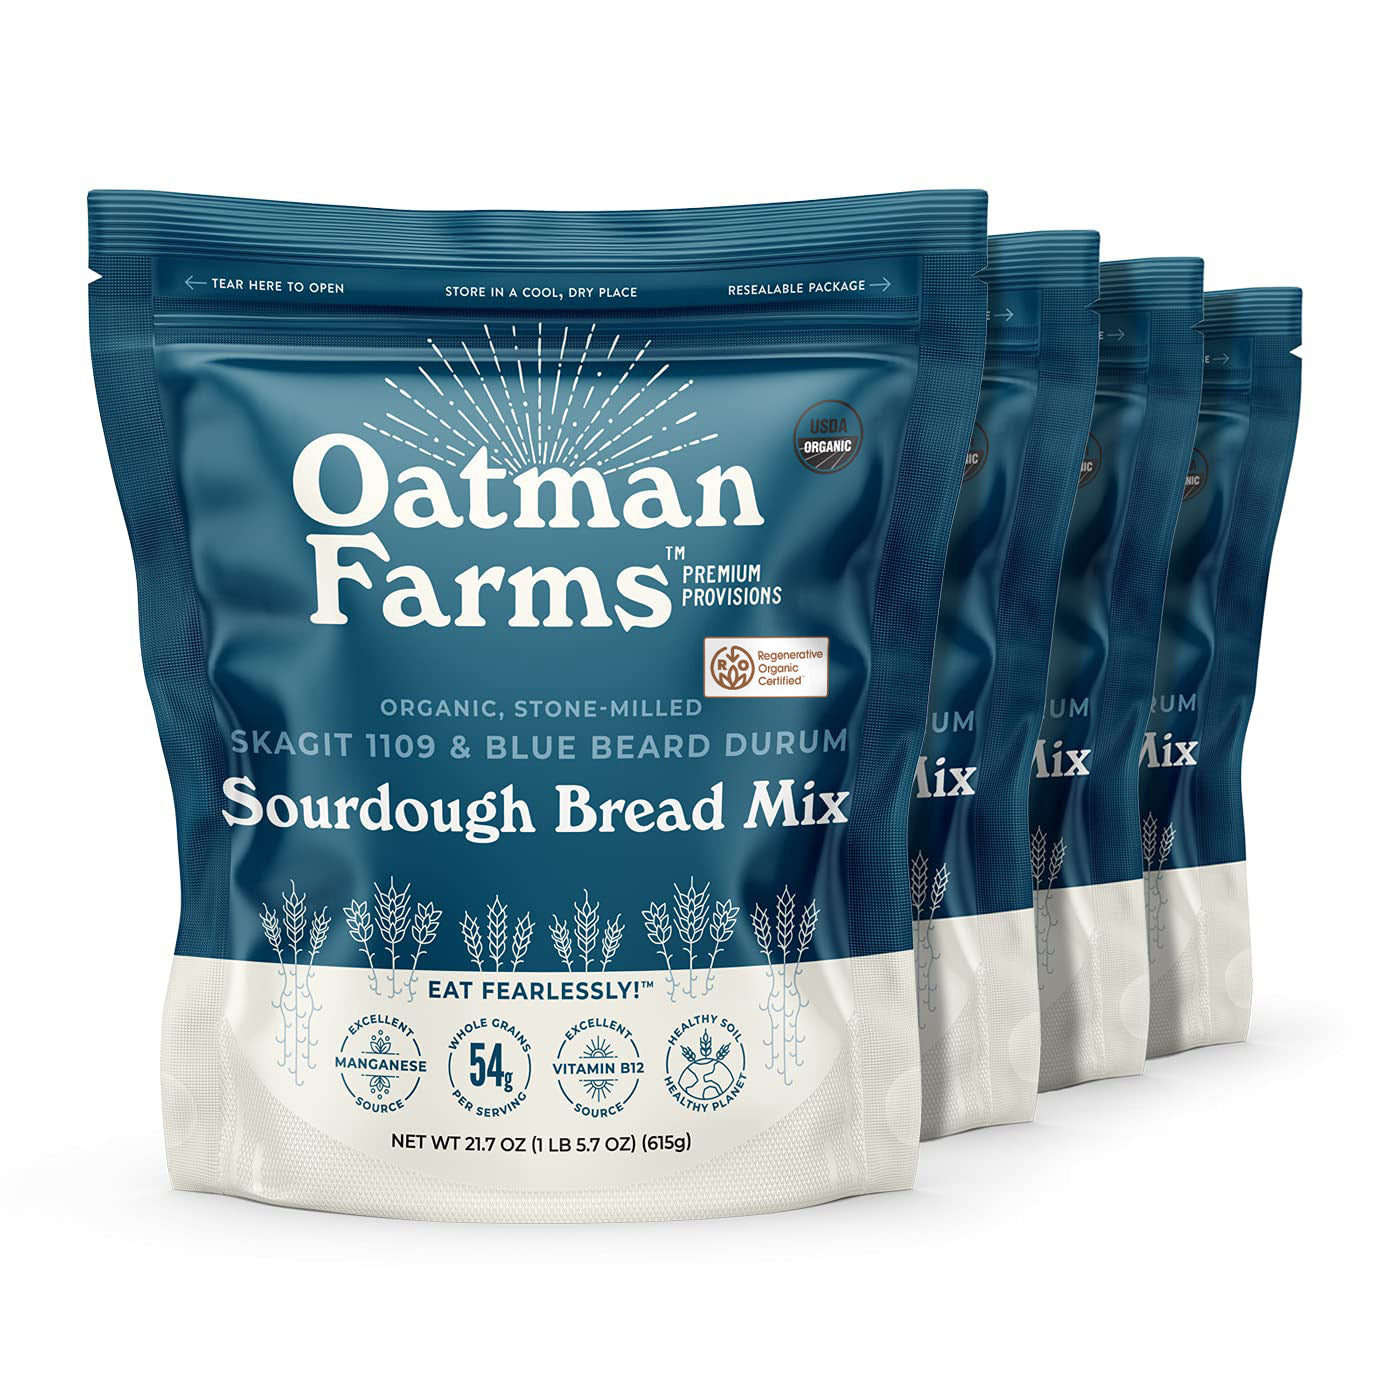 Oatman Farms Sourdough Bread Mix Blue Beard Durum & Skagit 1109, 4 Pack